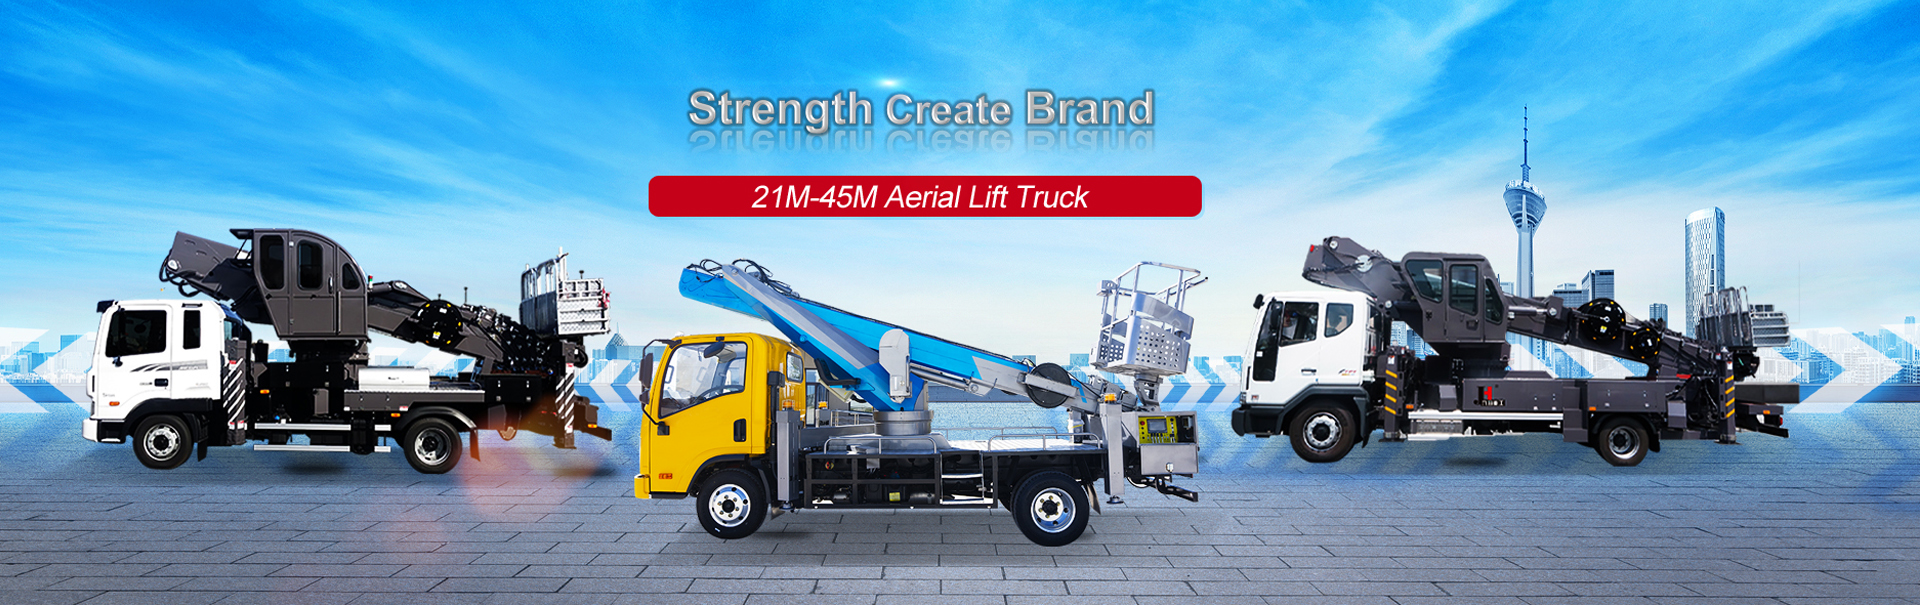 aerial lift truck, manlift truck, aerial work platform